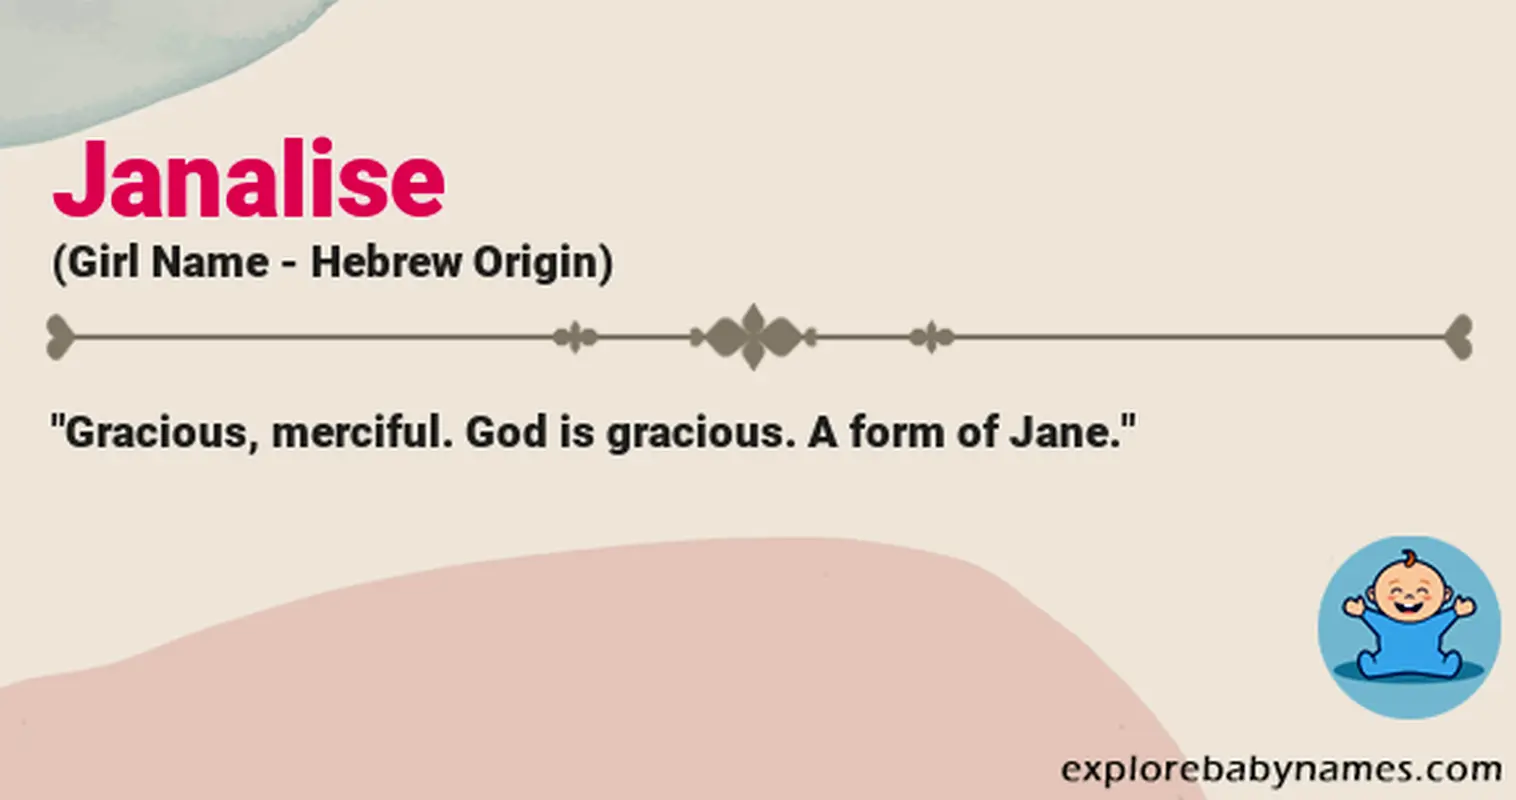 Meaning of Janalise